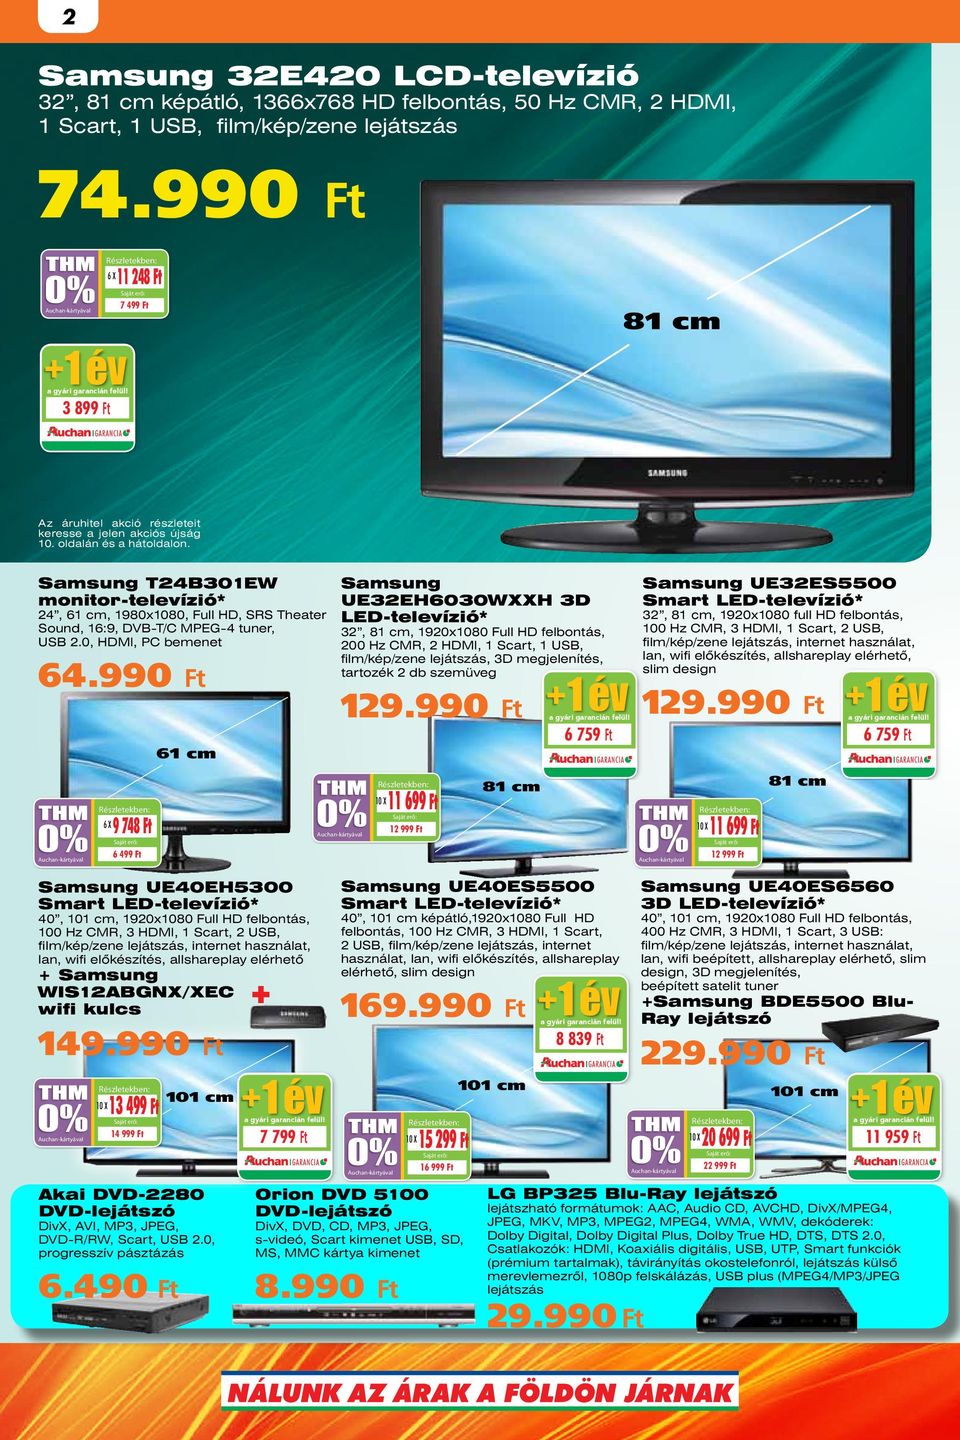 Samsung T24B301EW monitor-televízió* 24, 61 cm, 1980x1080, Full HD, SRS Theater Sound, 16:9, DVB-T/C MPEG-4 tuner, USB 2.0, HDMI, PC bemenet 64.